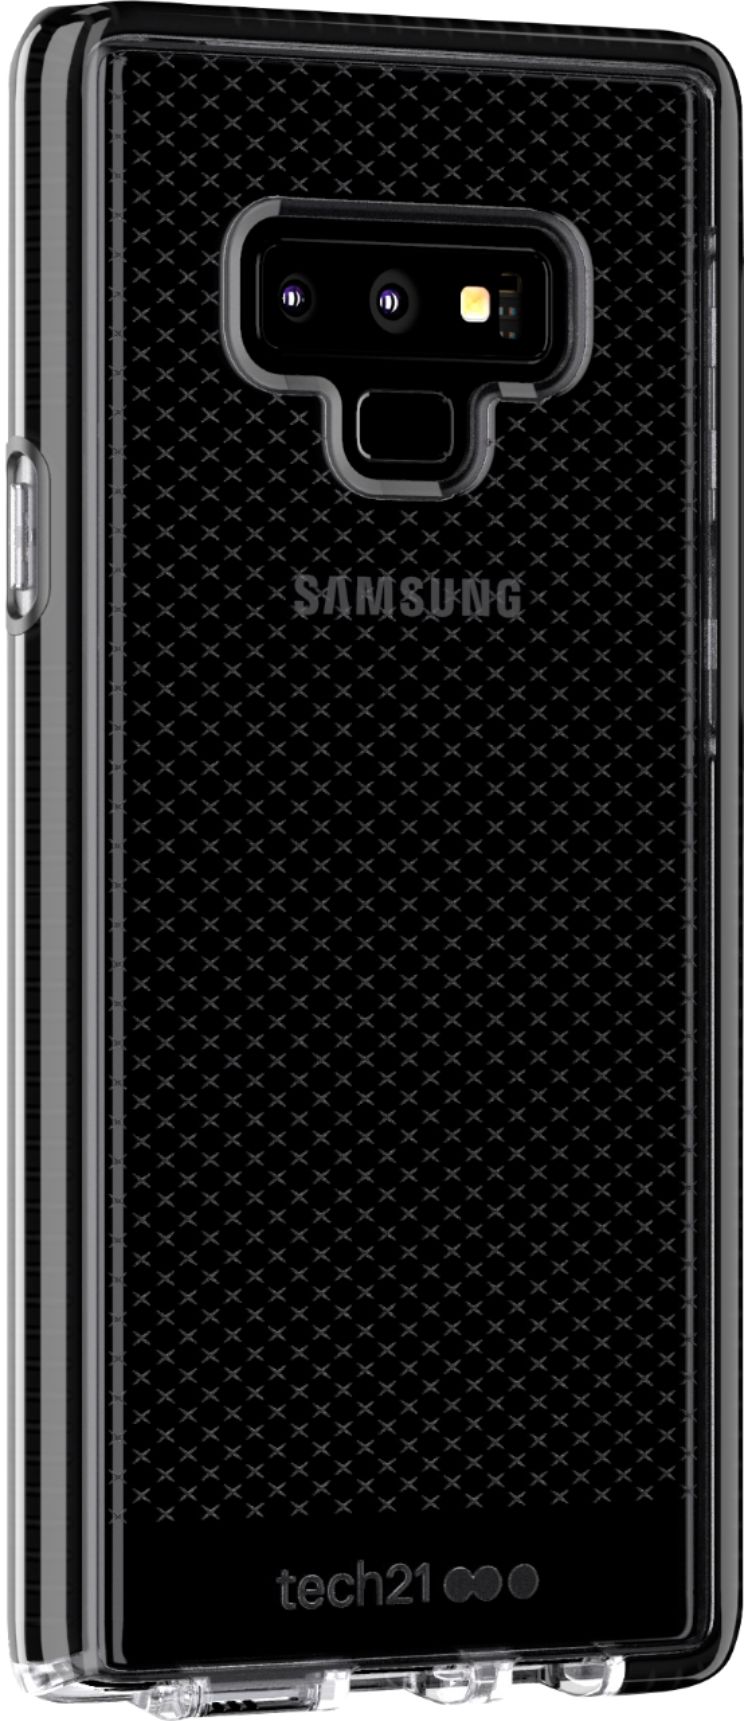 Angle View: Tech21 - Evo Check Case for Samsung Galaxy Note9 - Black/Smokey